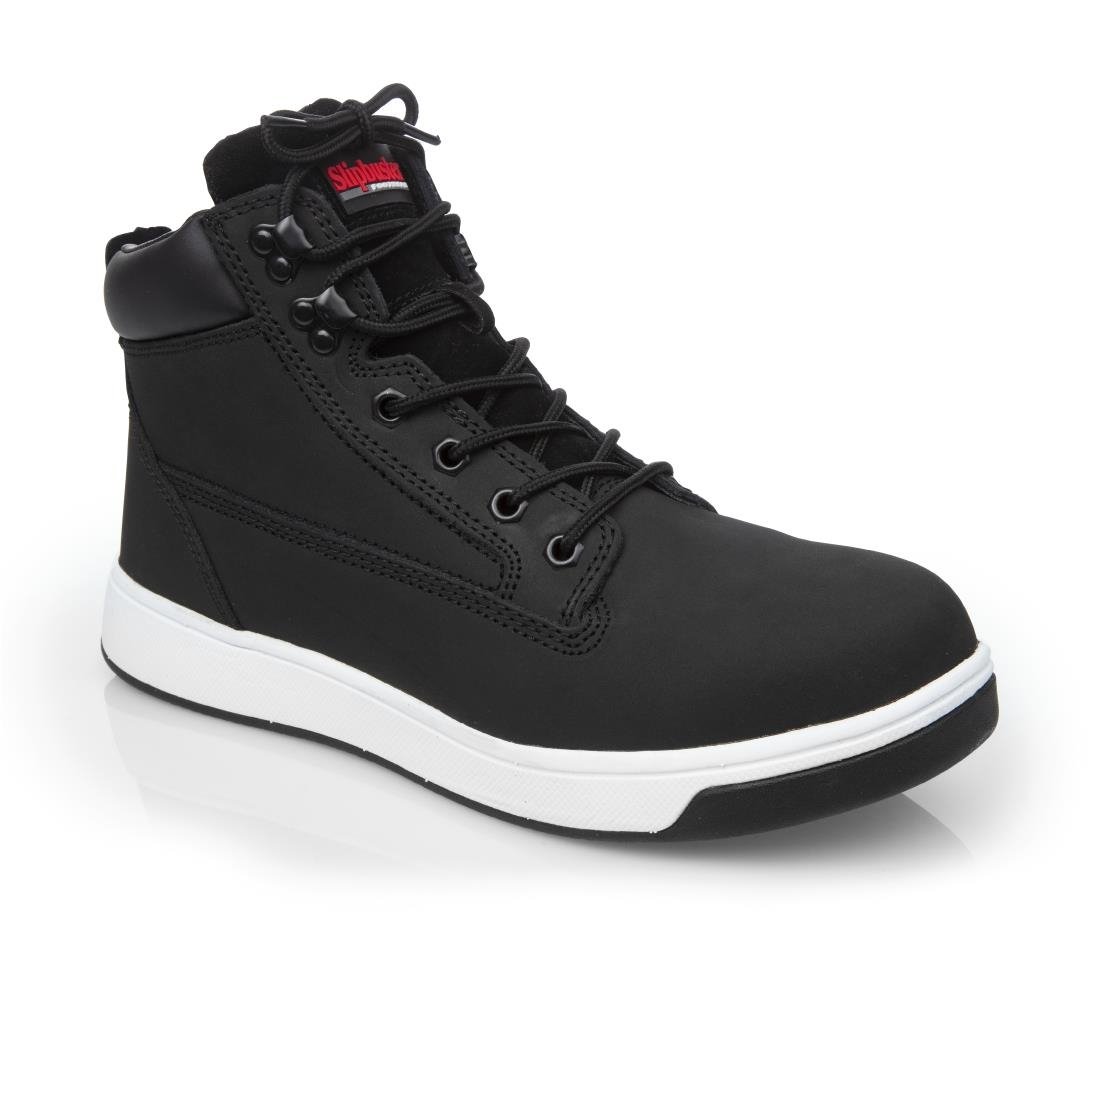 BB422-40 Slipbuster Sneaker Boots Black 40 JD Catering Equipment Solutions Ltd